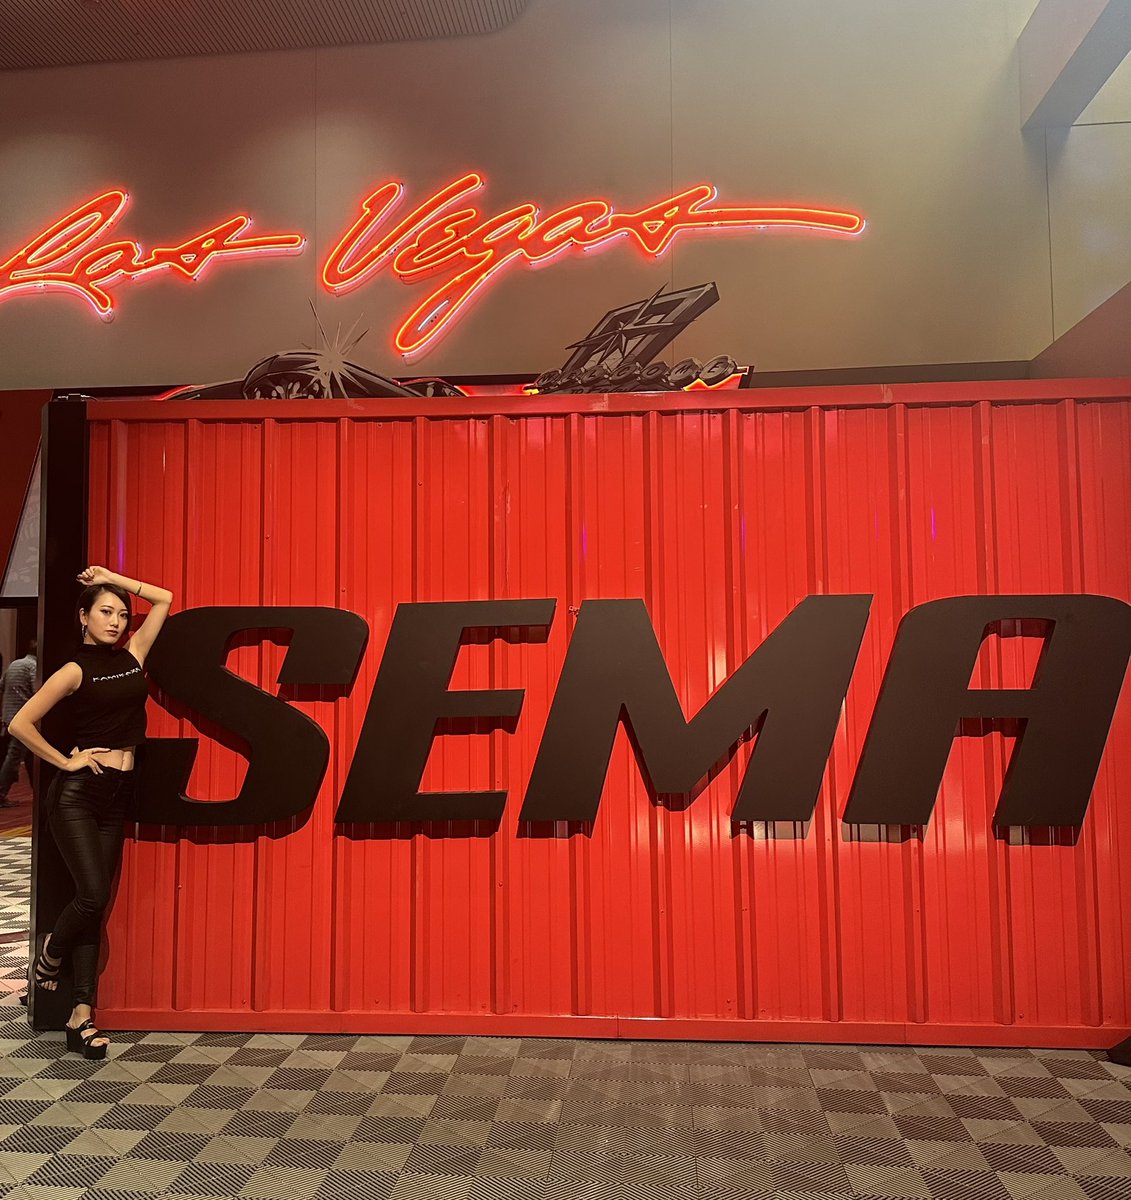 SEMA SHOW in Las Vegas❤️‍🔥　
無事4日間の出演を終えました💐

世界最高峰のカスタムカーショーで吸収した事は、バッチリ次に活かしていきます🗽